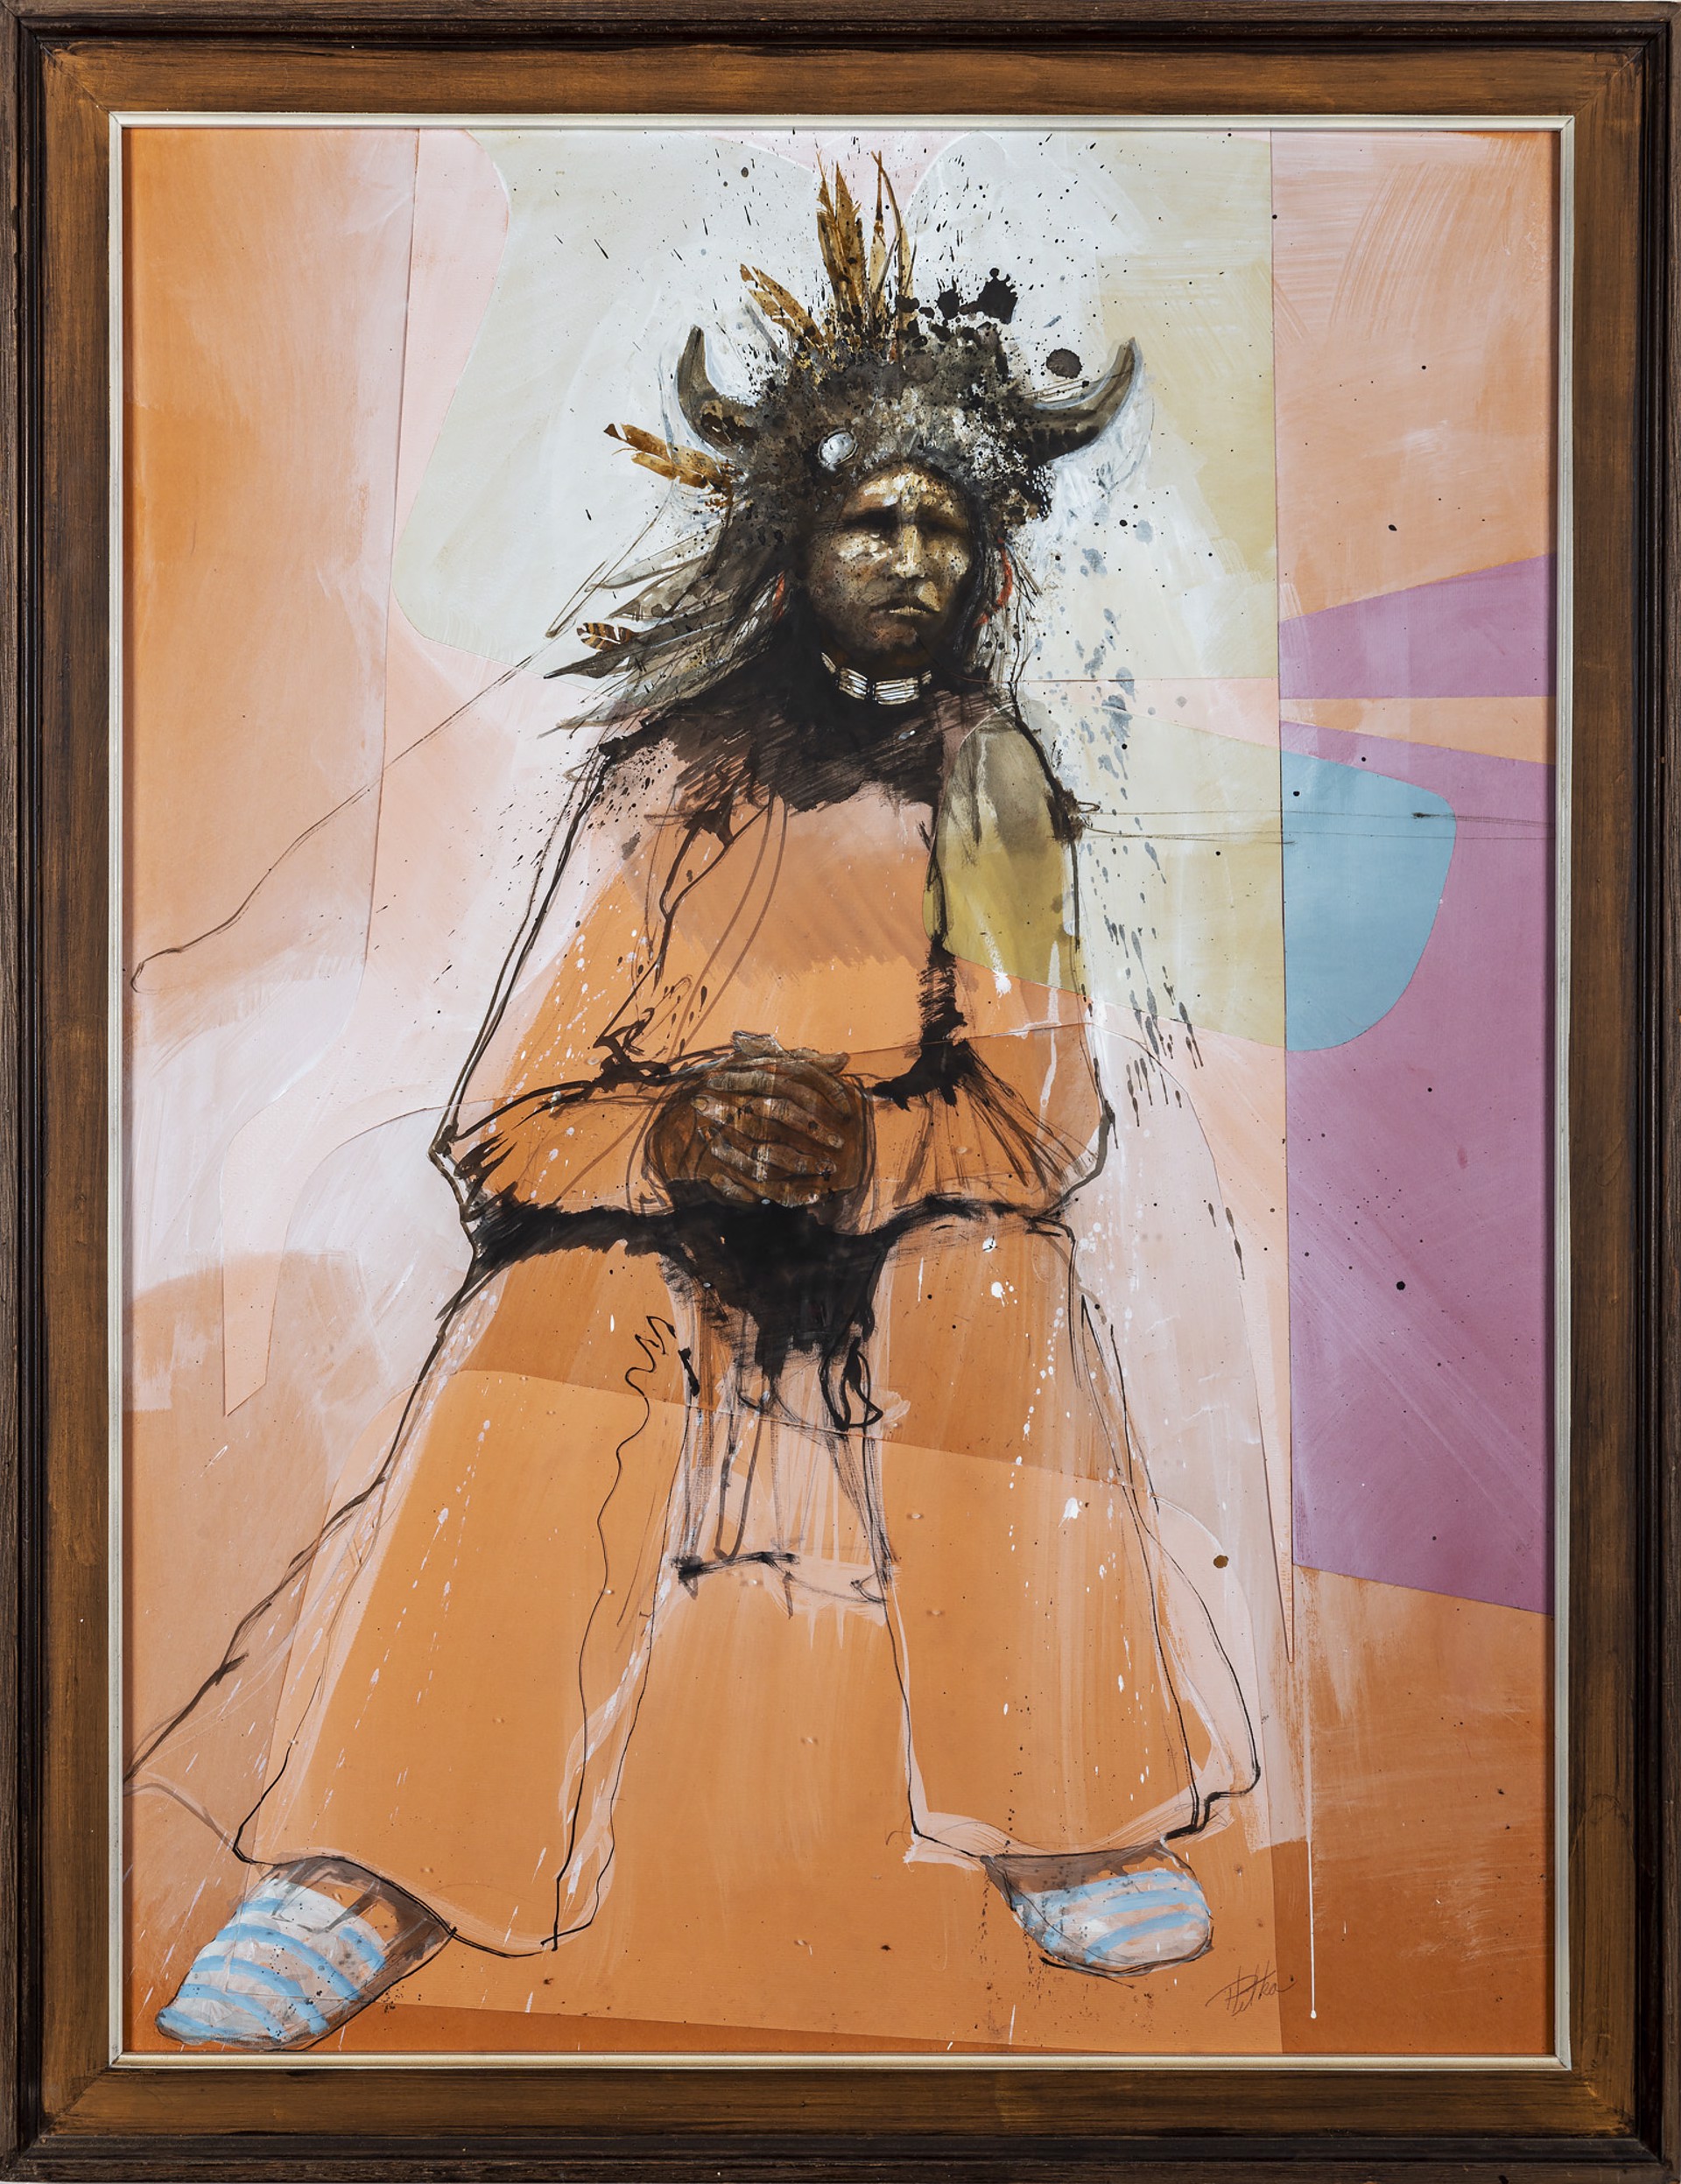 Untitled (American Indian Portrait) by Paul Pletka